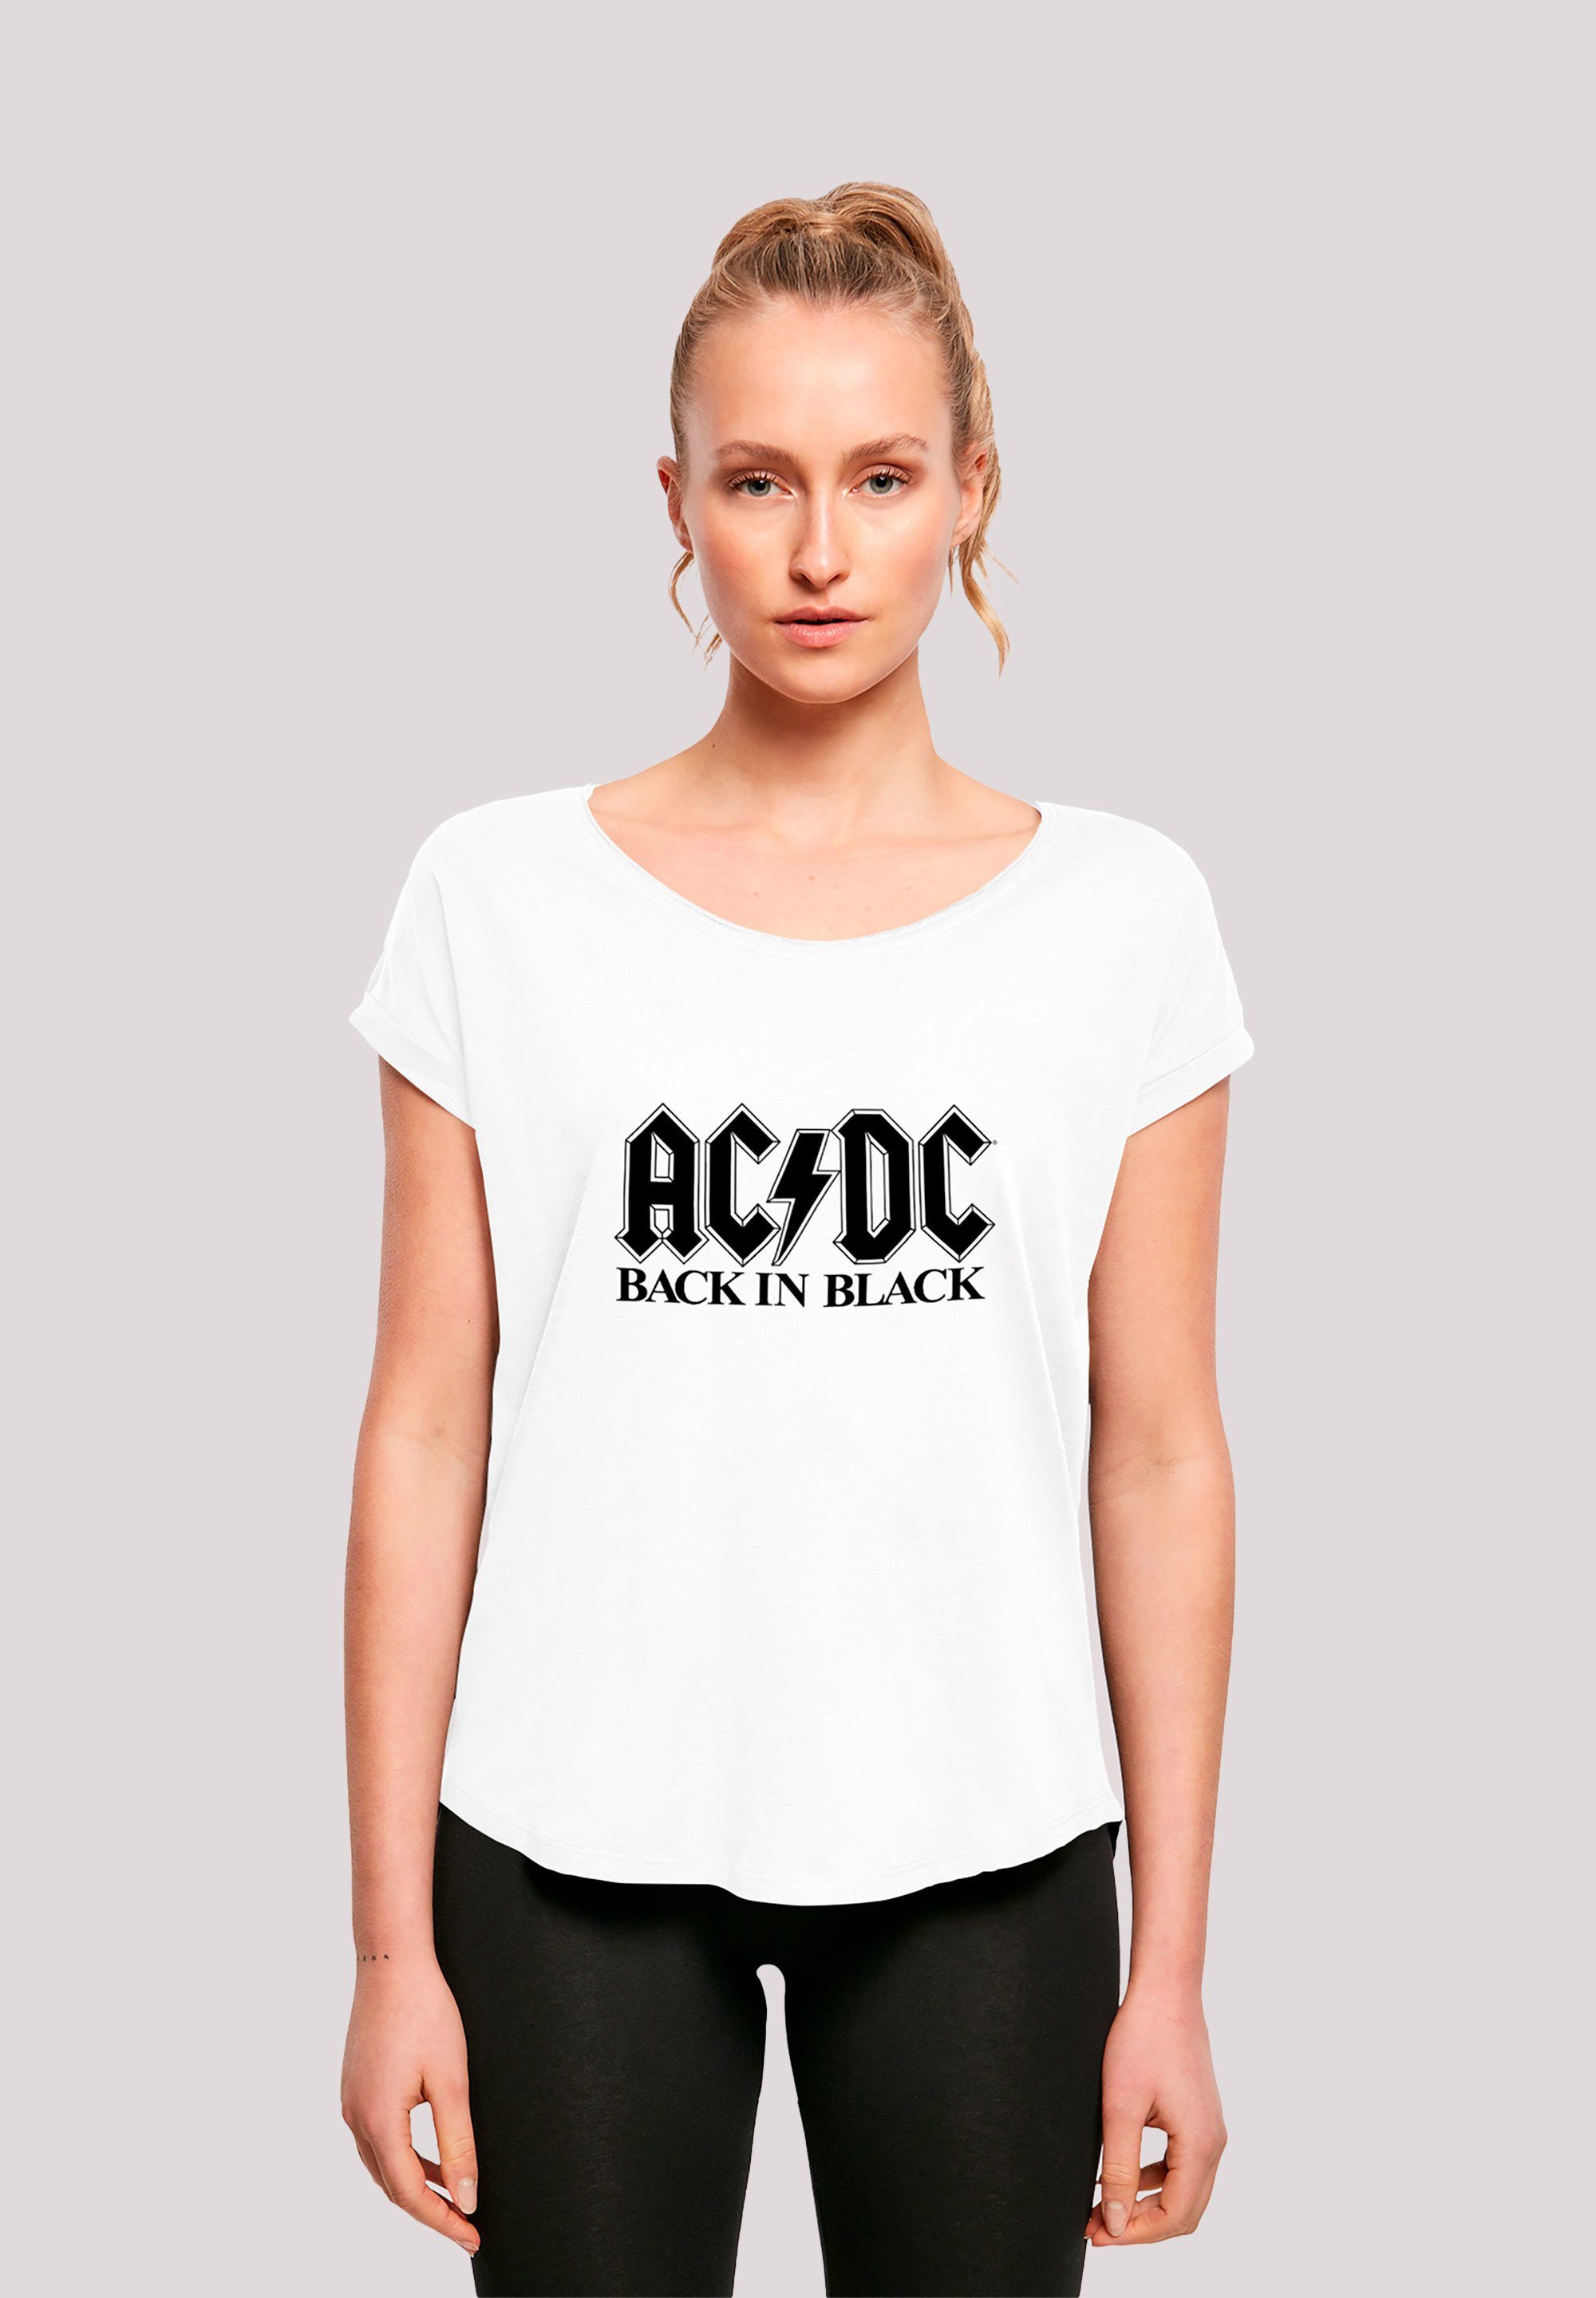 F4NT4STIC T-Shirt ACDC Back In Black Logo für Kinder & Herren Print